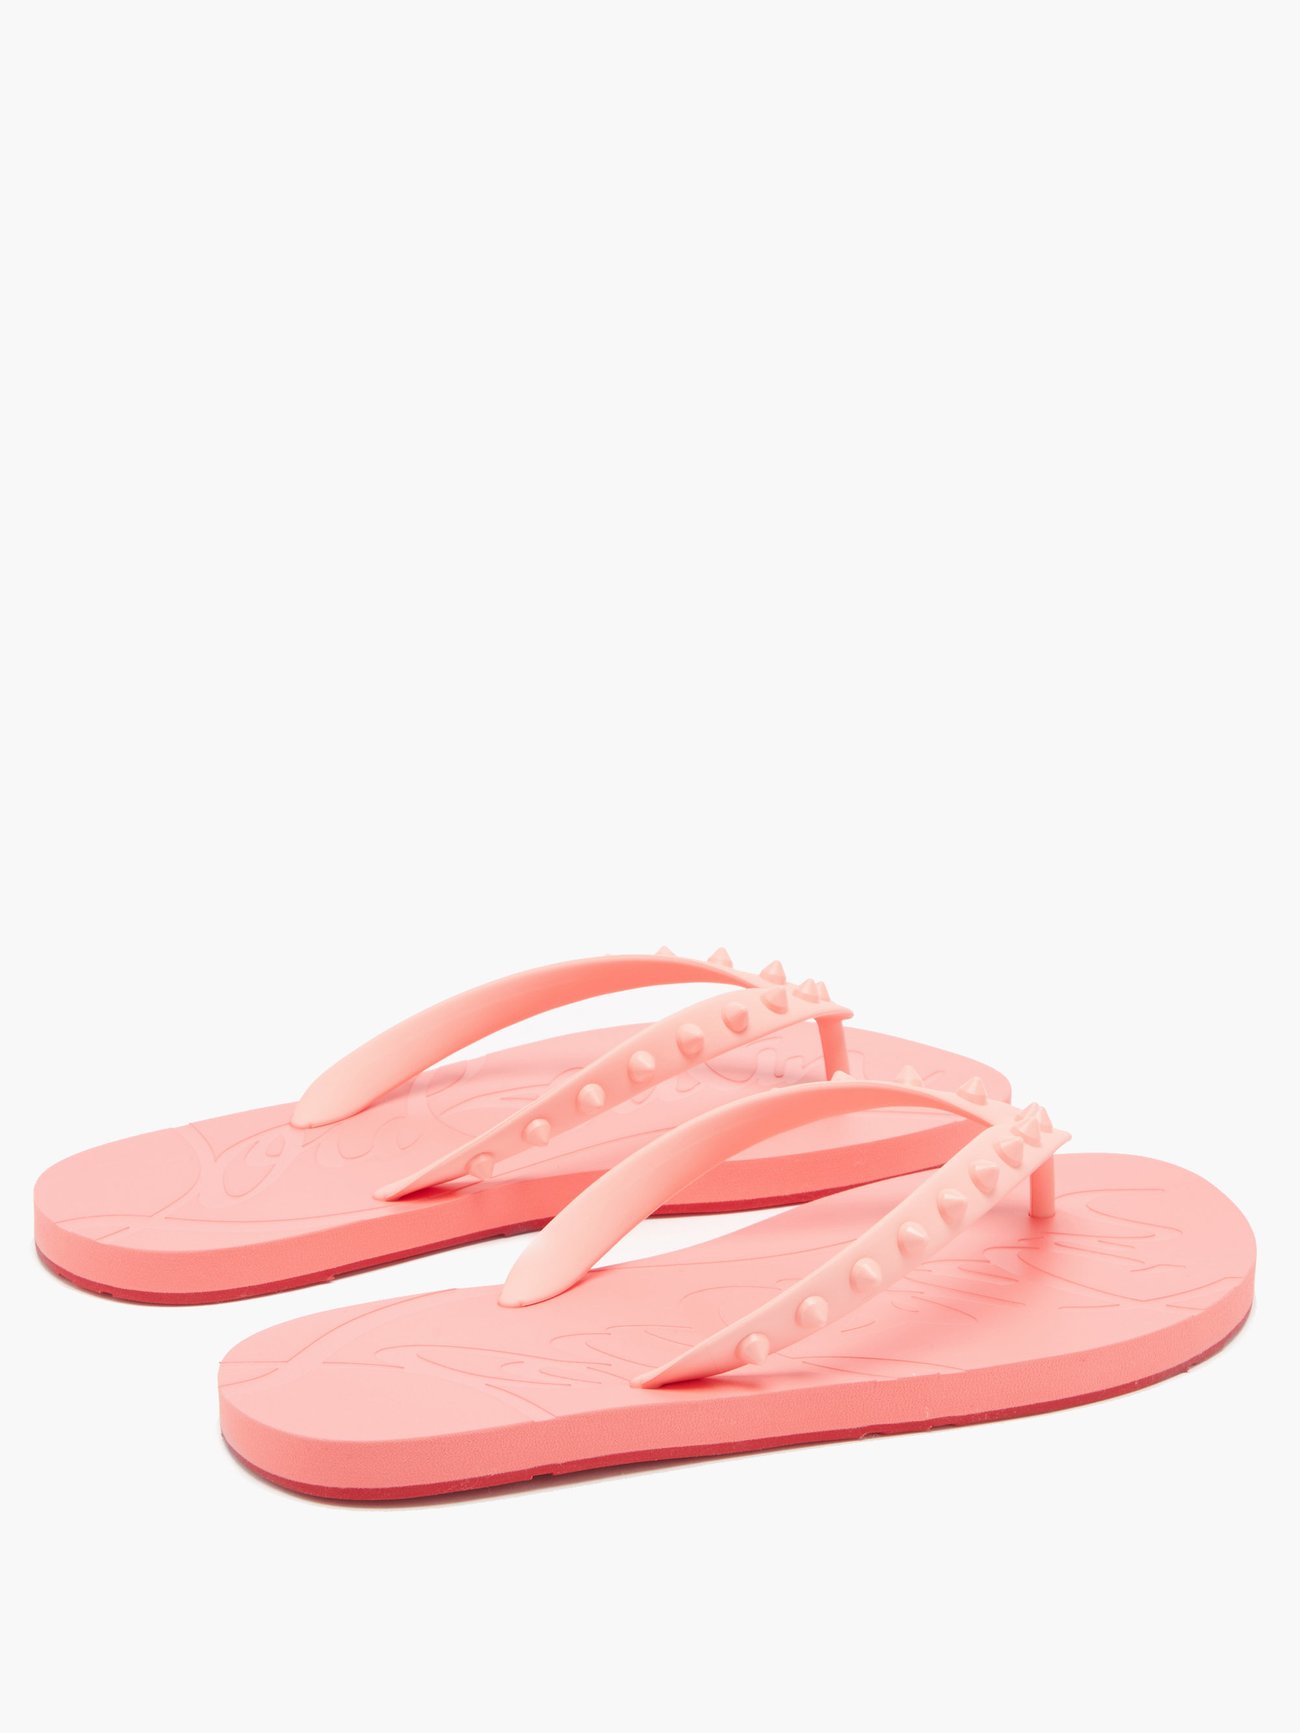 Flip flops Christian Louboutin Pink size 41 EU in Rubber - 27455888